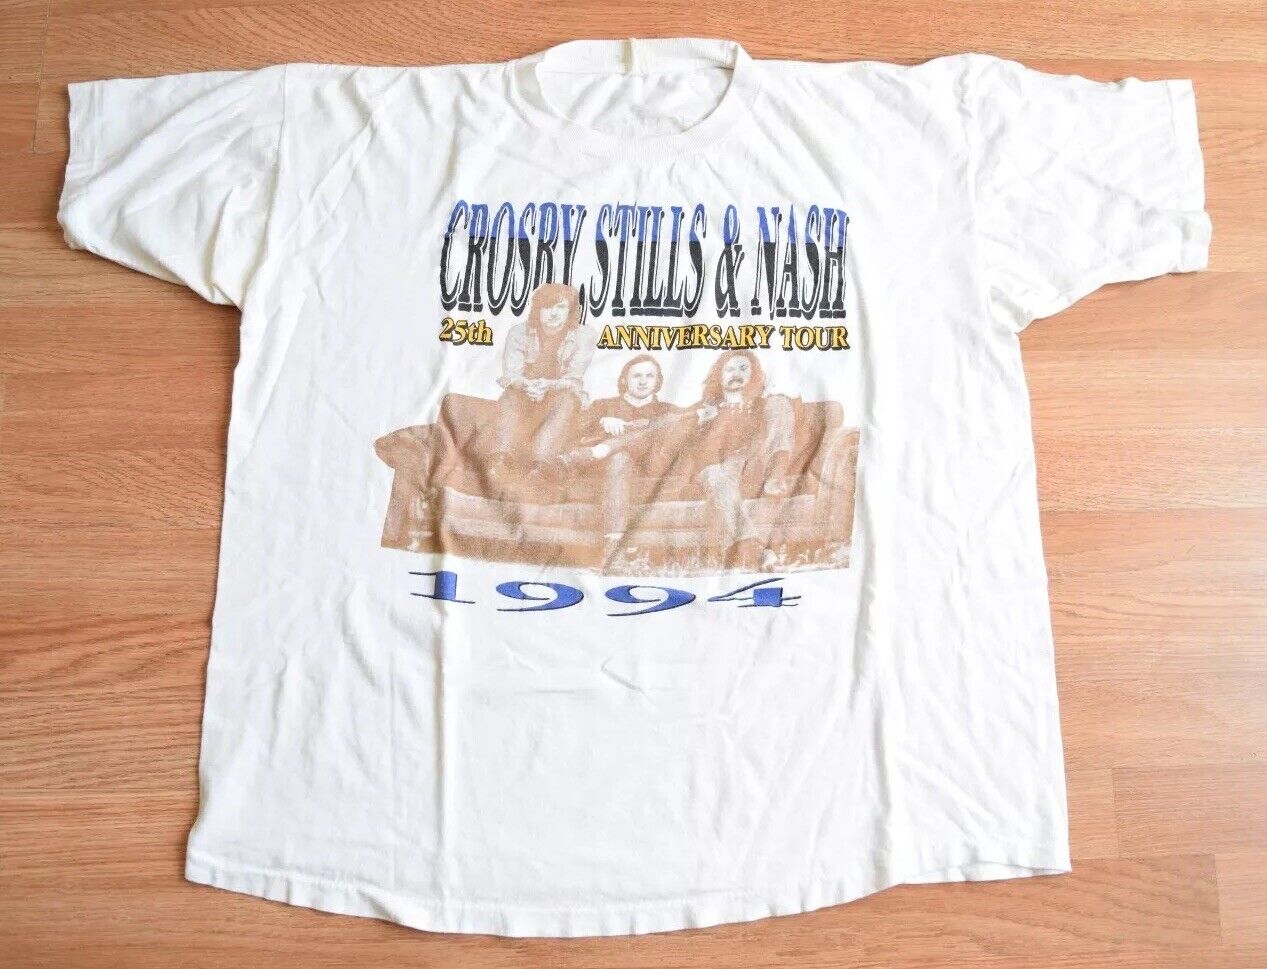 Vintage 1994 Crosby Stills & Nash Tour Shirt Tee L 90s Fleetwood Mac Neil Young